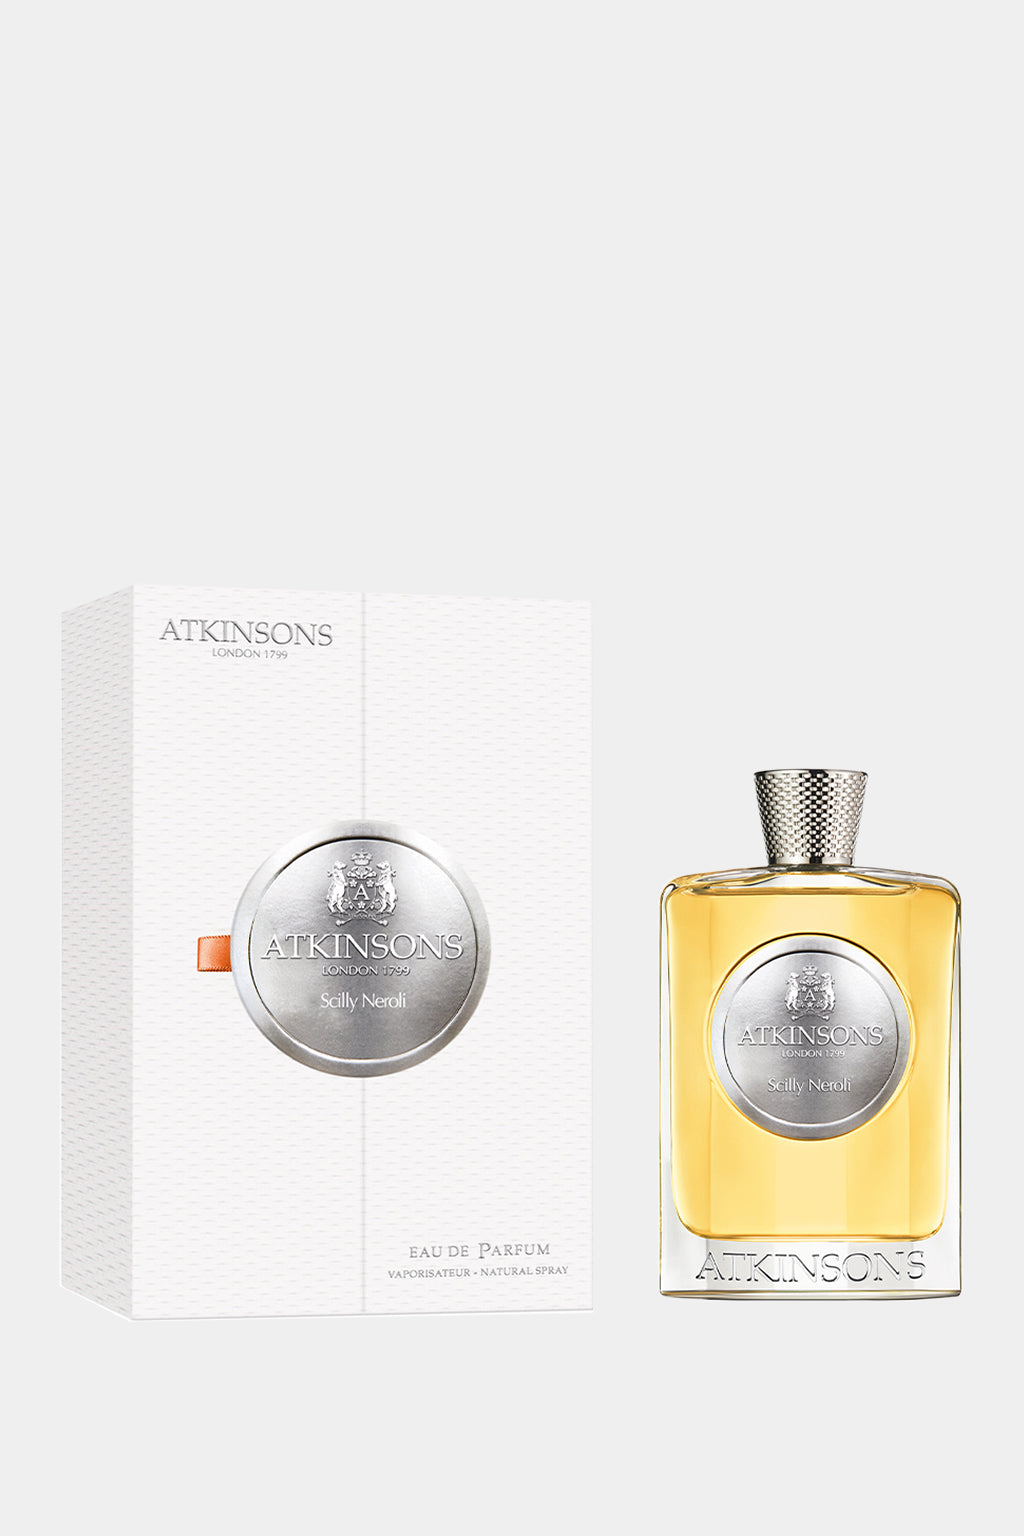 Atkinsons - Scilly Neroli Eau de Parfum